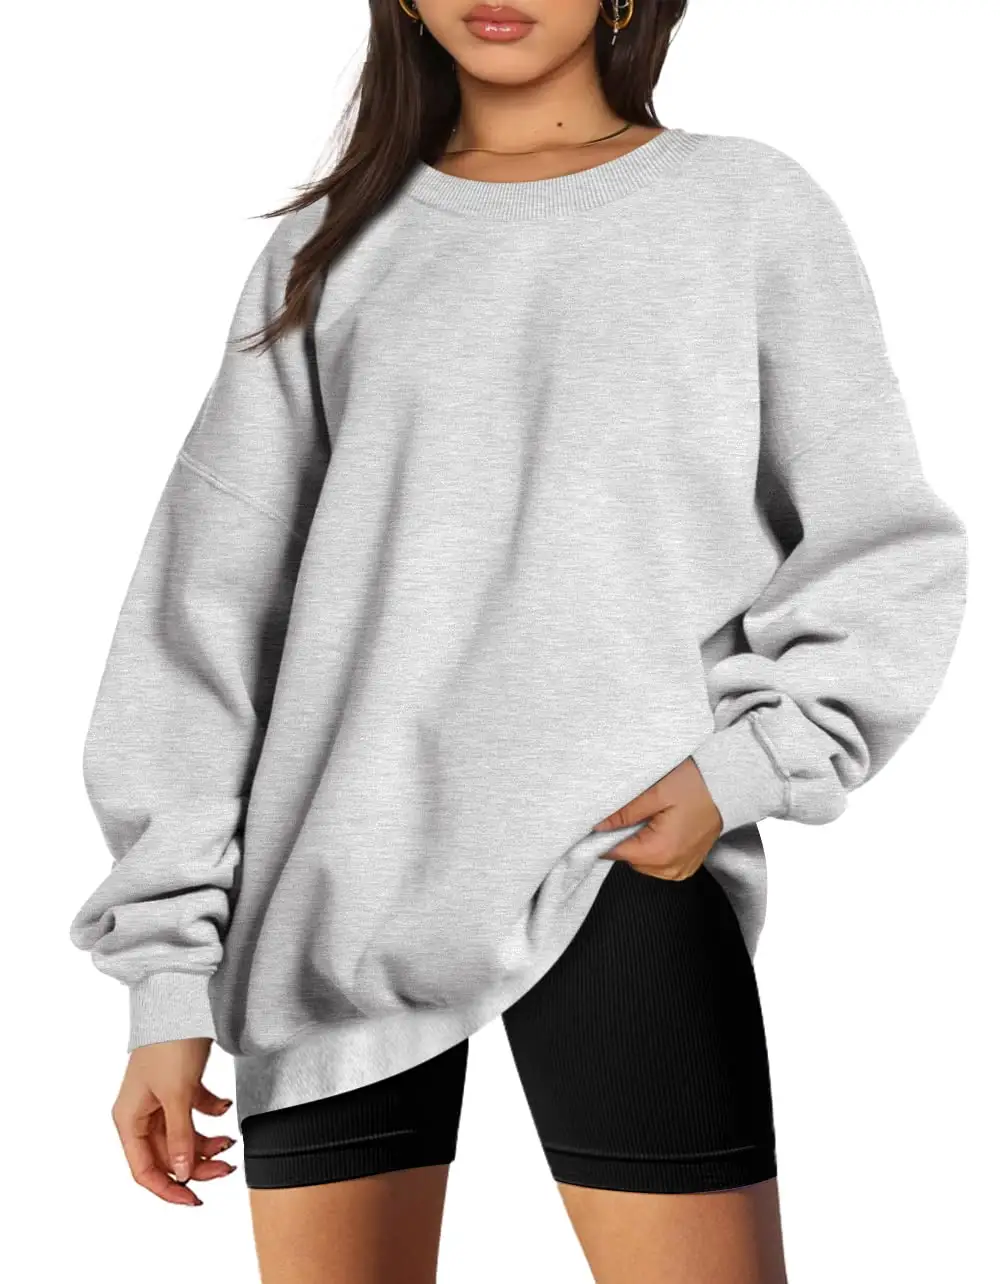 Übergroße Fleece Damen Sweatshirts Langarm Pullover mit Rundhals ausschnitt Casual Hoodie Tops